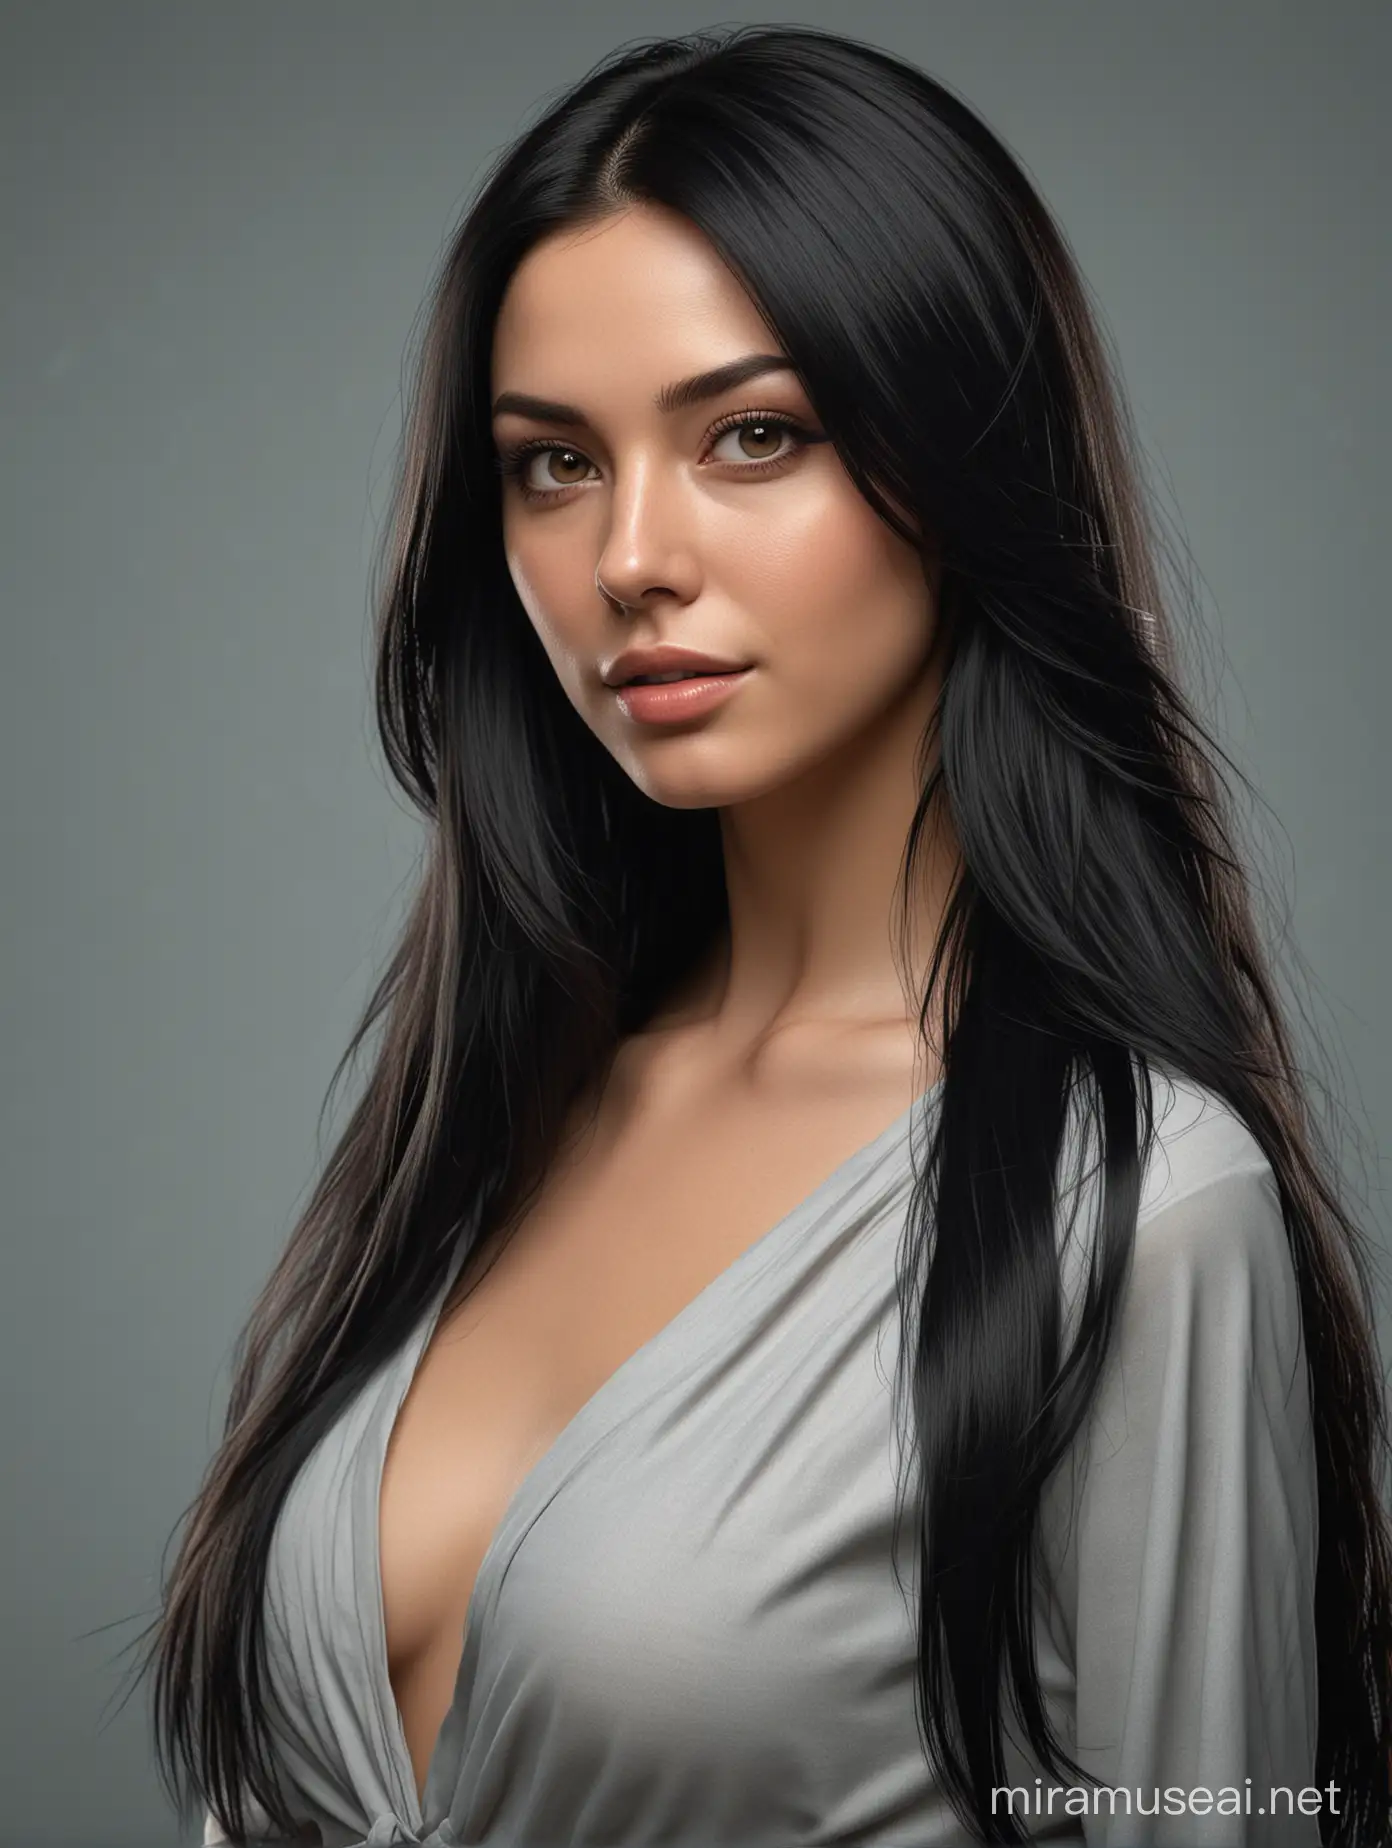 Elegant Woman with Long Black Hair in Realistic Maya Style Portrait